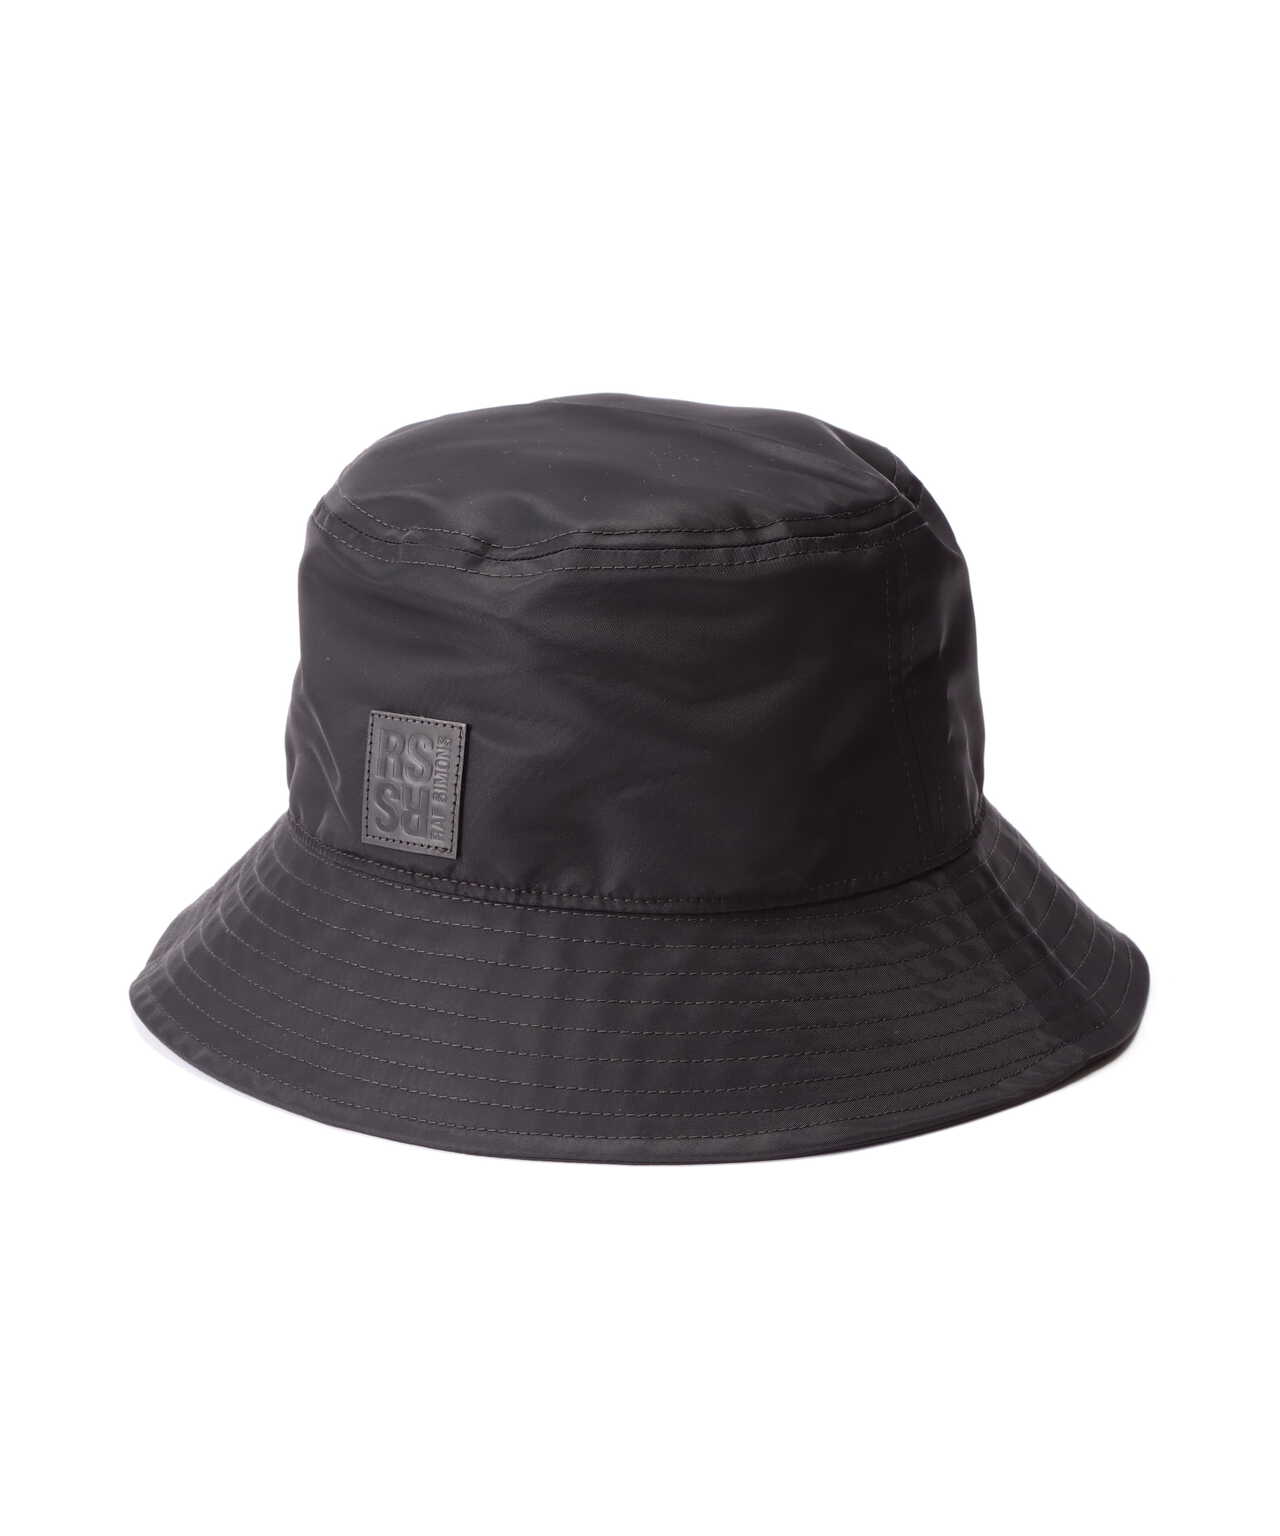 RAFSIMONS/ラフシモンズ/Bucket Hat With Small Leater/バケットハット ...